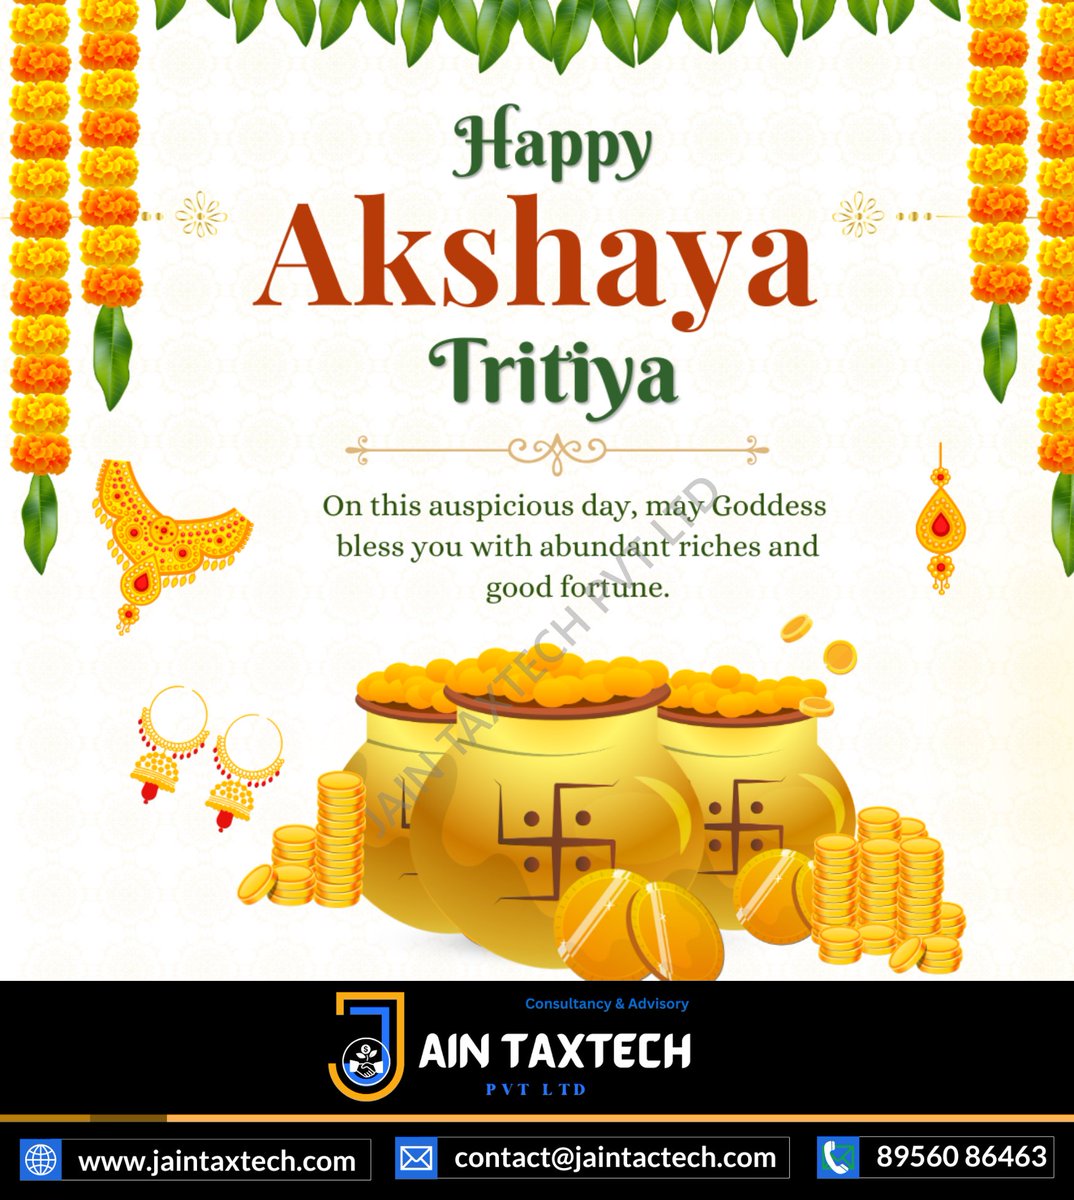 Happy Akshaya Tritiya! 🌟🪔 Wishing You Prosperity, Success, and Abundance on this Auspicious Day. Jain TaxTech Sends Warm Greetings on Akshaya Tritiya! 🎉🌺 #AkshayaTritiya #Prosperity #Abundance #JainTaxTech #AccountingServices #TaxConsultants #BookkeepingServices